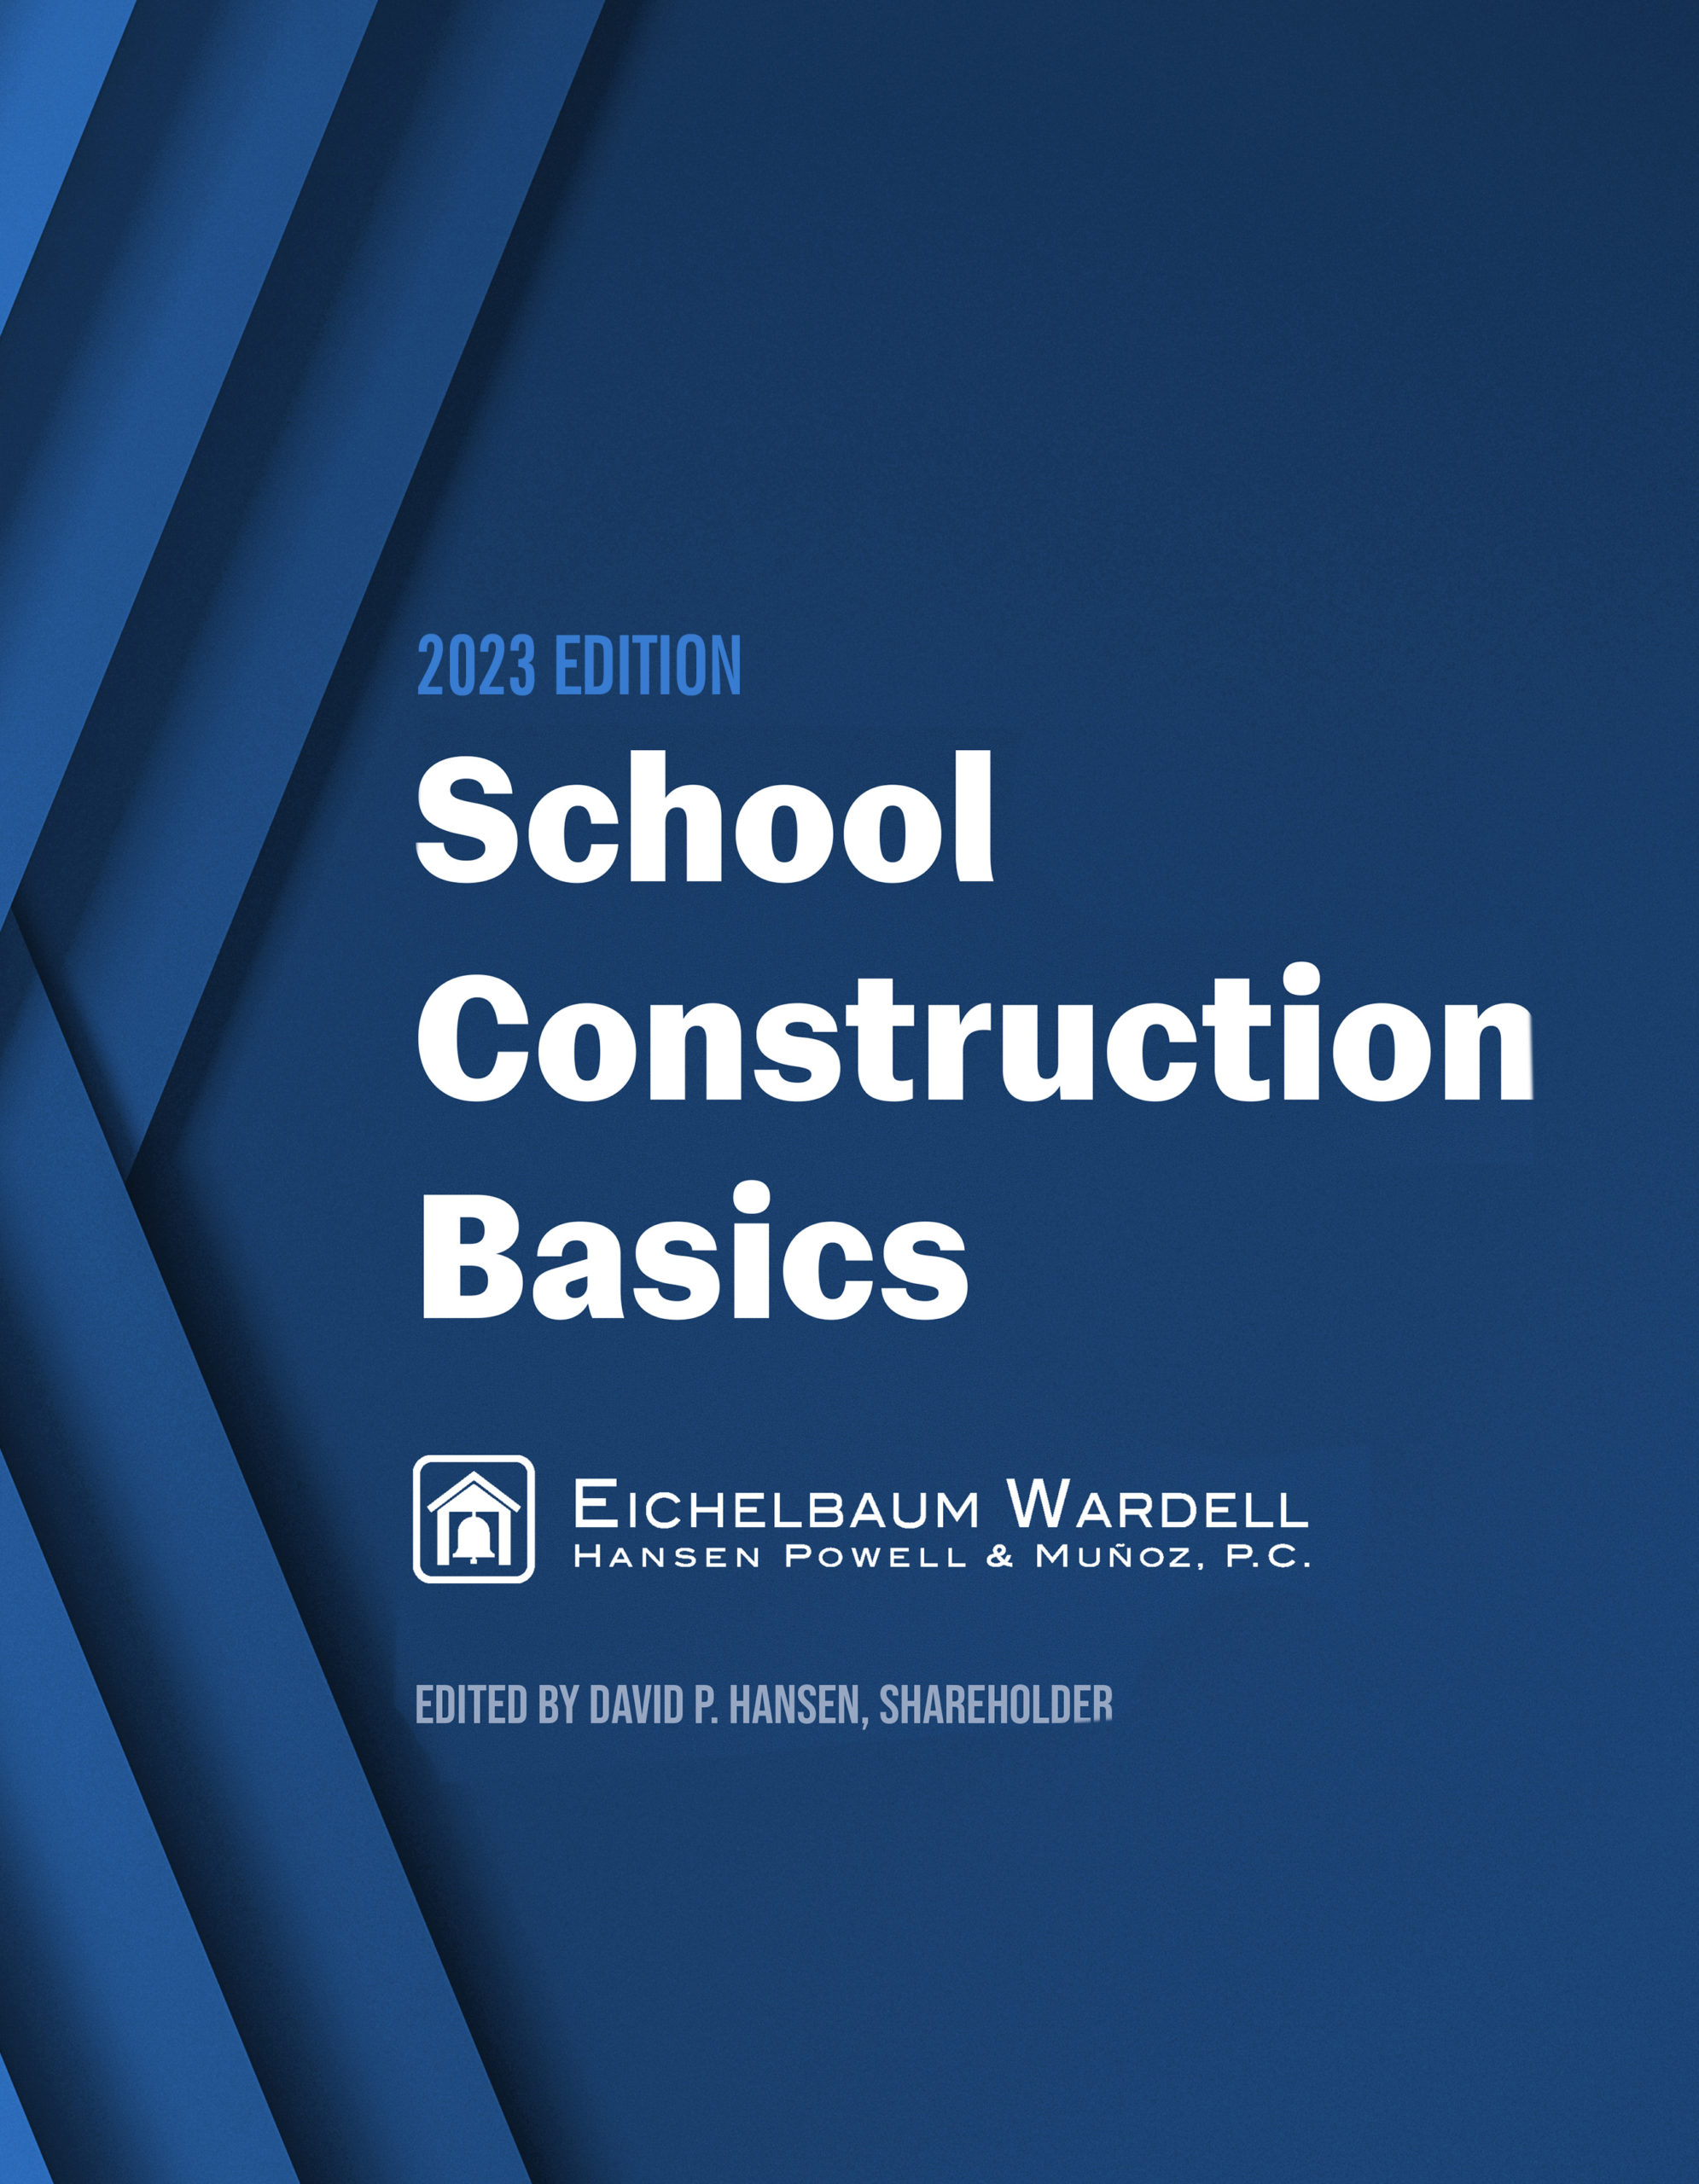 School Construction Basics E-book